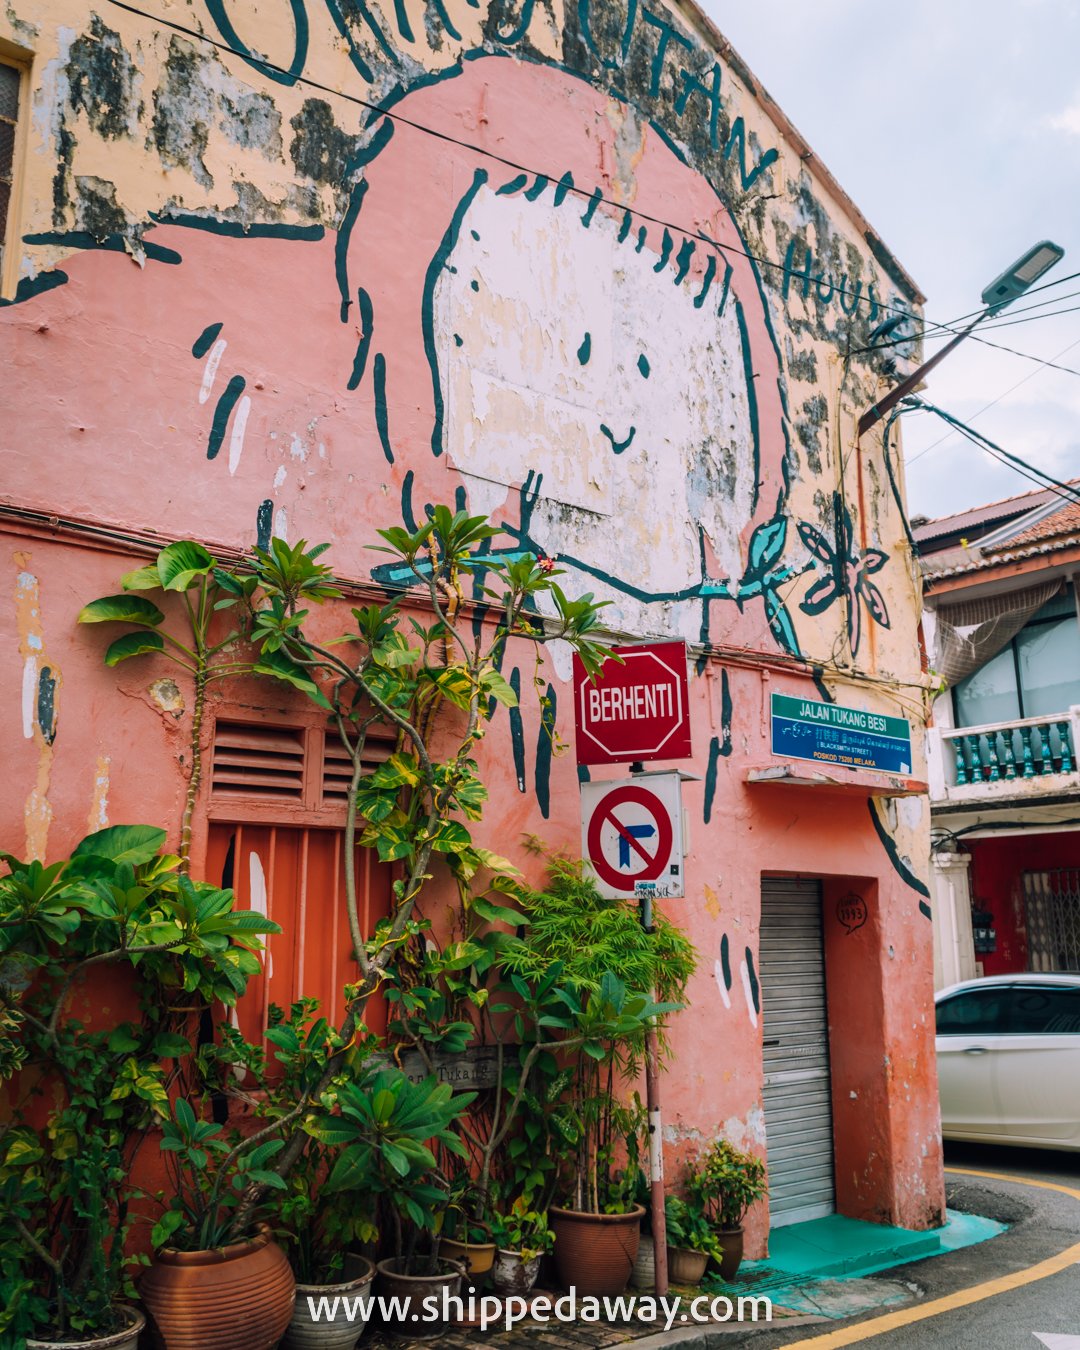 Orangutan House street art in Melaka, Malaysia